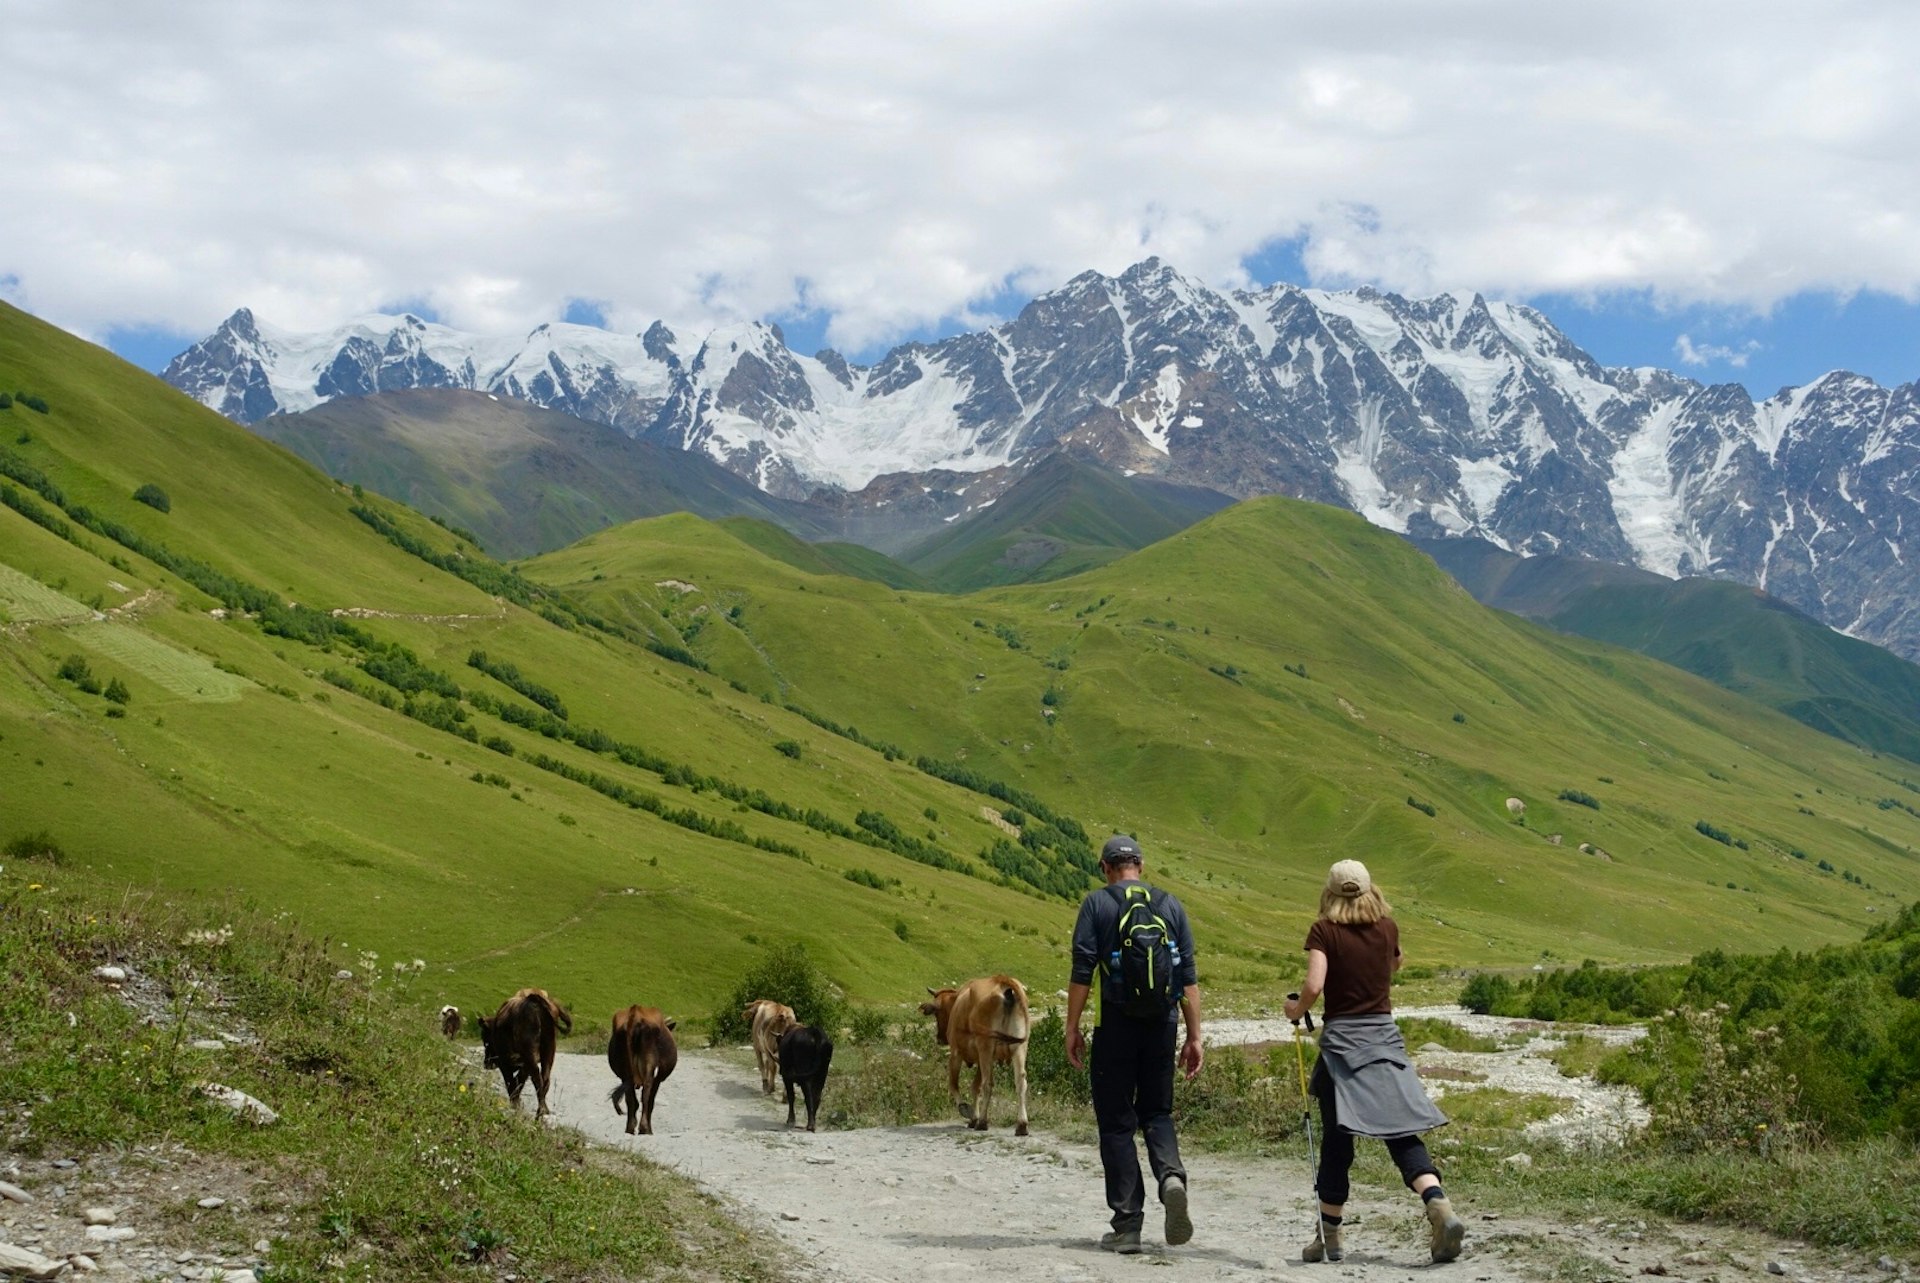 A bit of hiker traffic on the Transcaucasian Trail near Ushguli, Svaneti, Georgia